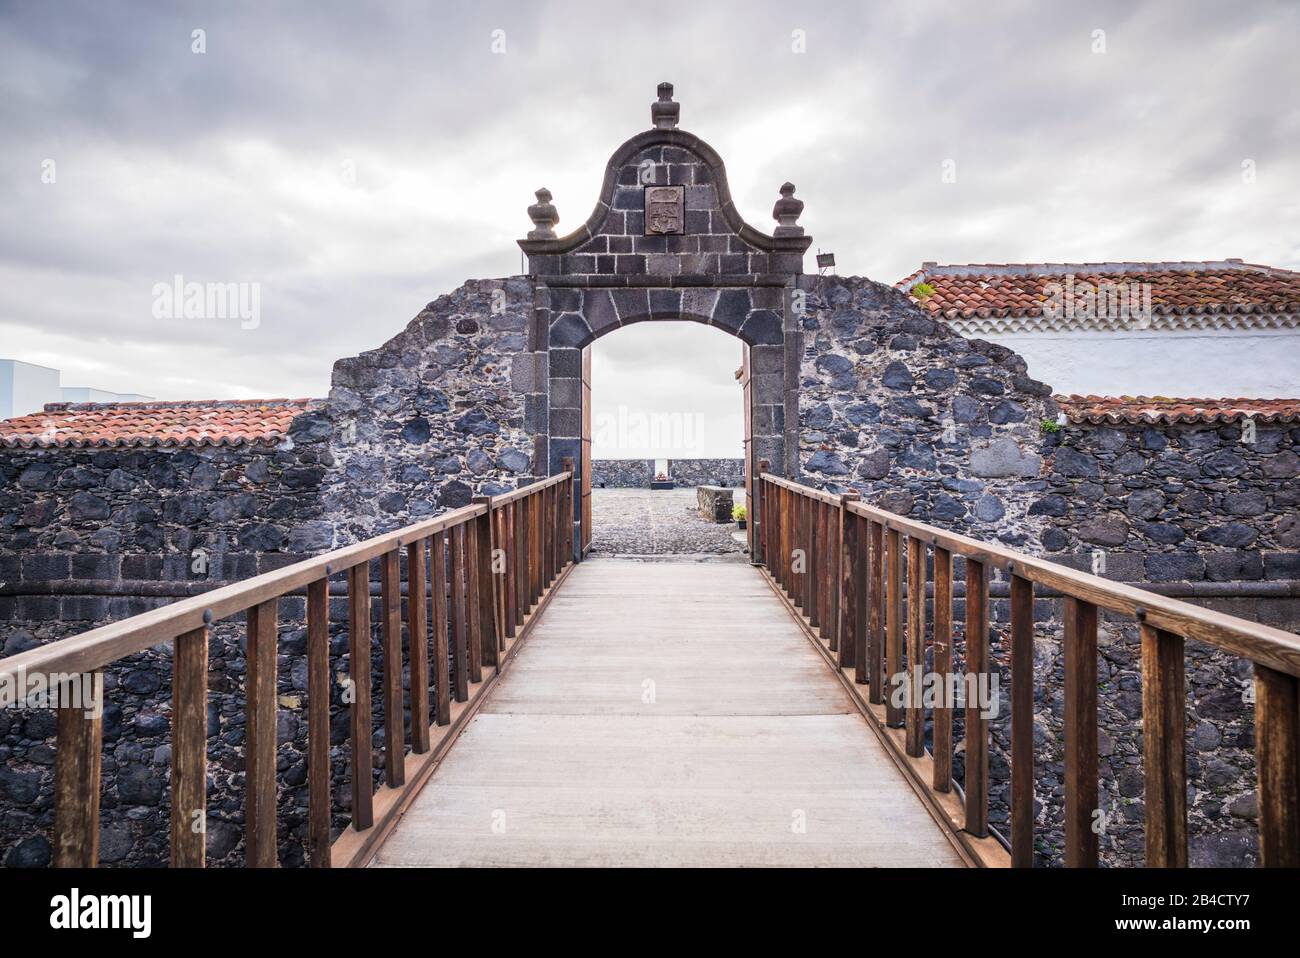 Spain, Canary Islands, La Palma Island, Santa Cruz de la Palma, Castillo de Santa Catalina Fortress Stock Photo